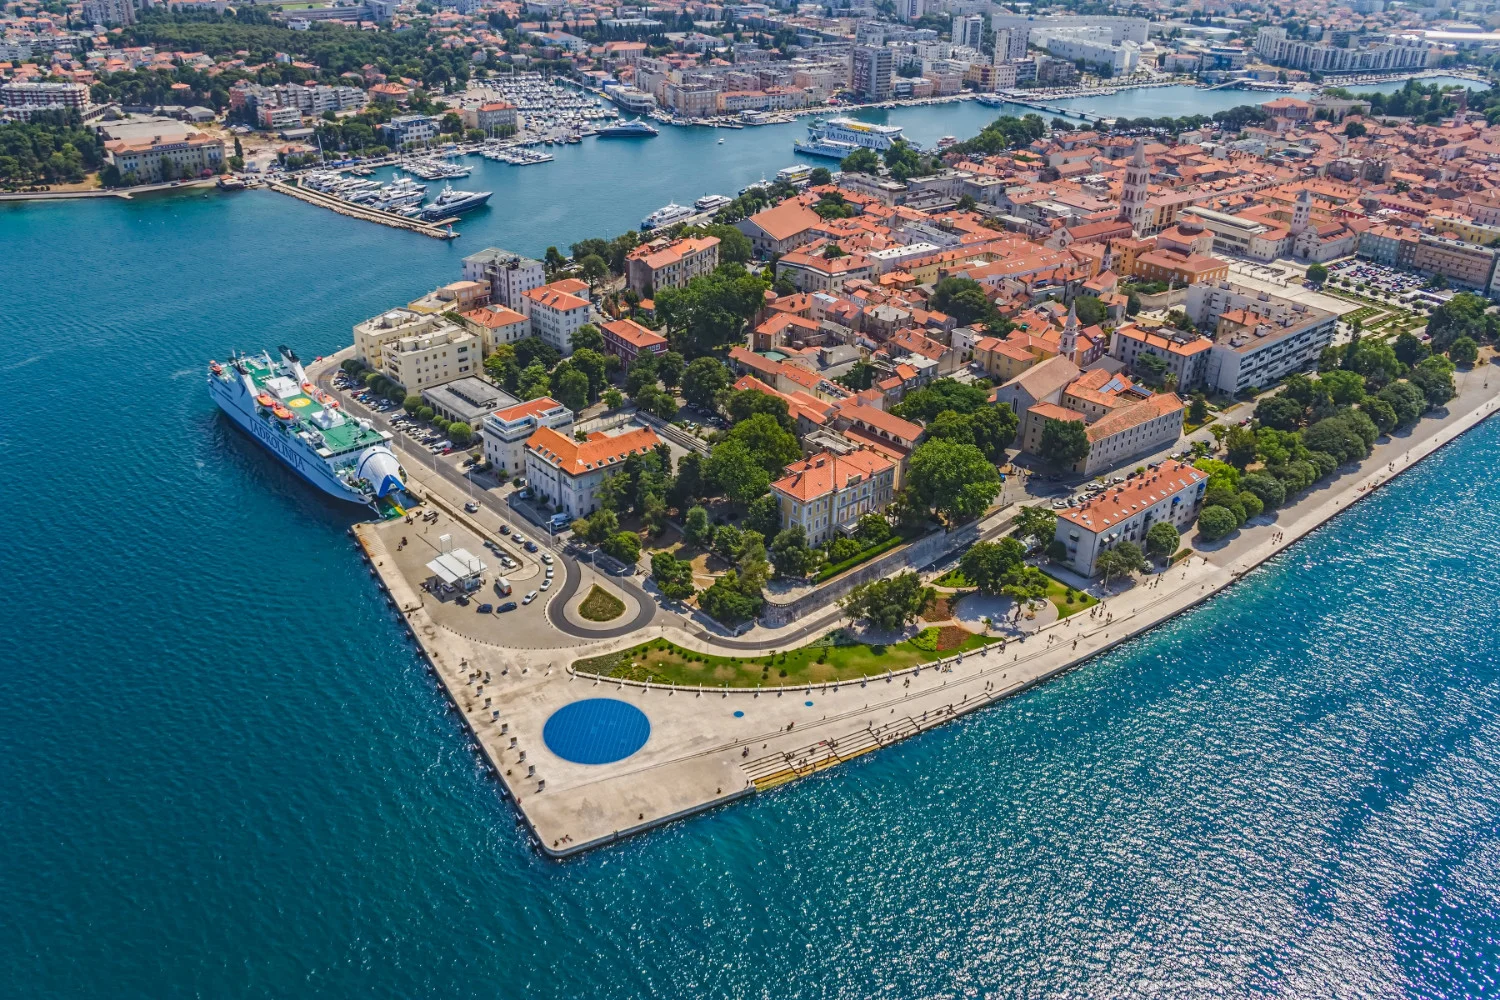 Aerial view of Zadar - a popular destination on the Croatian coast